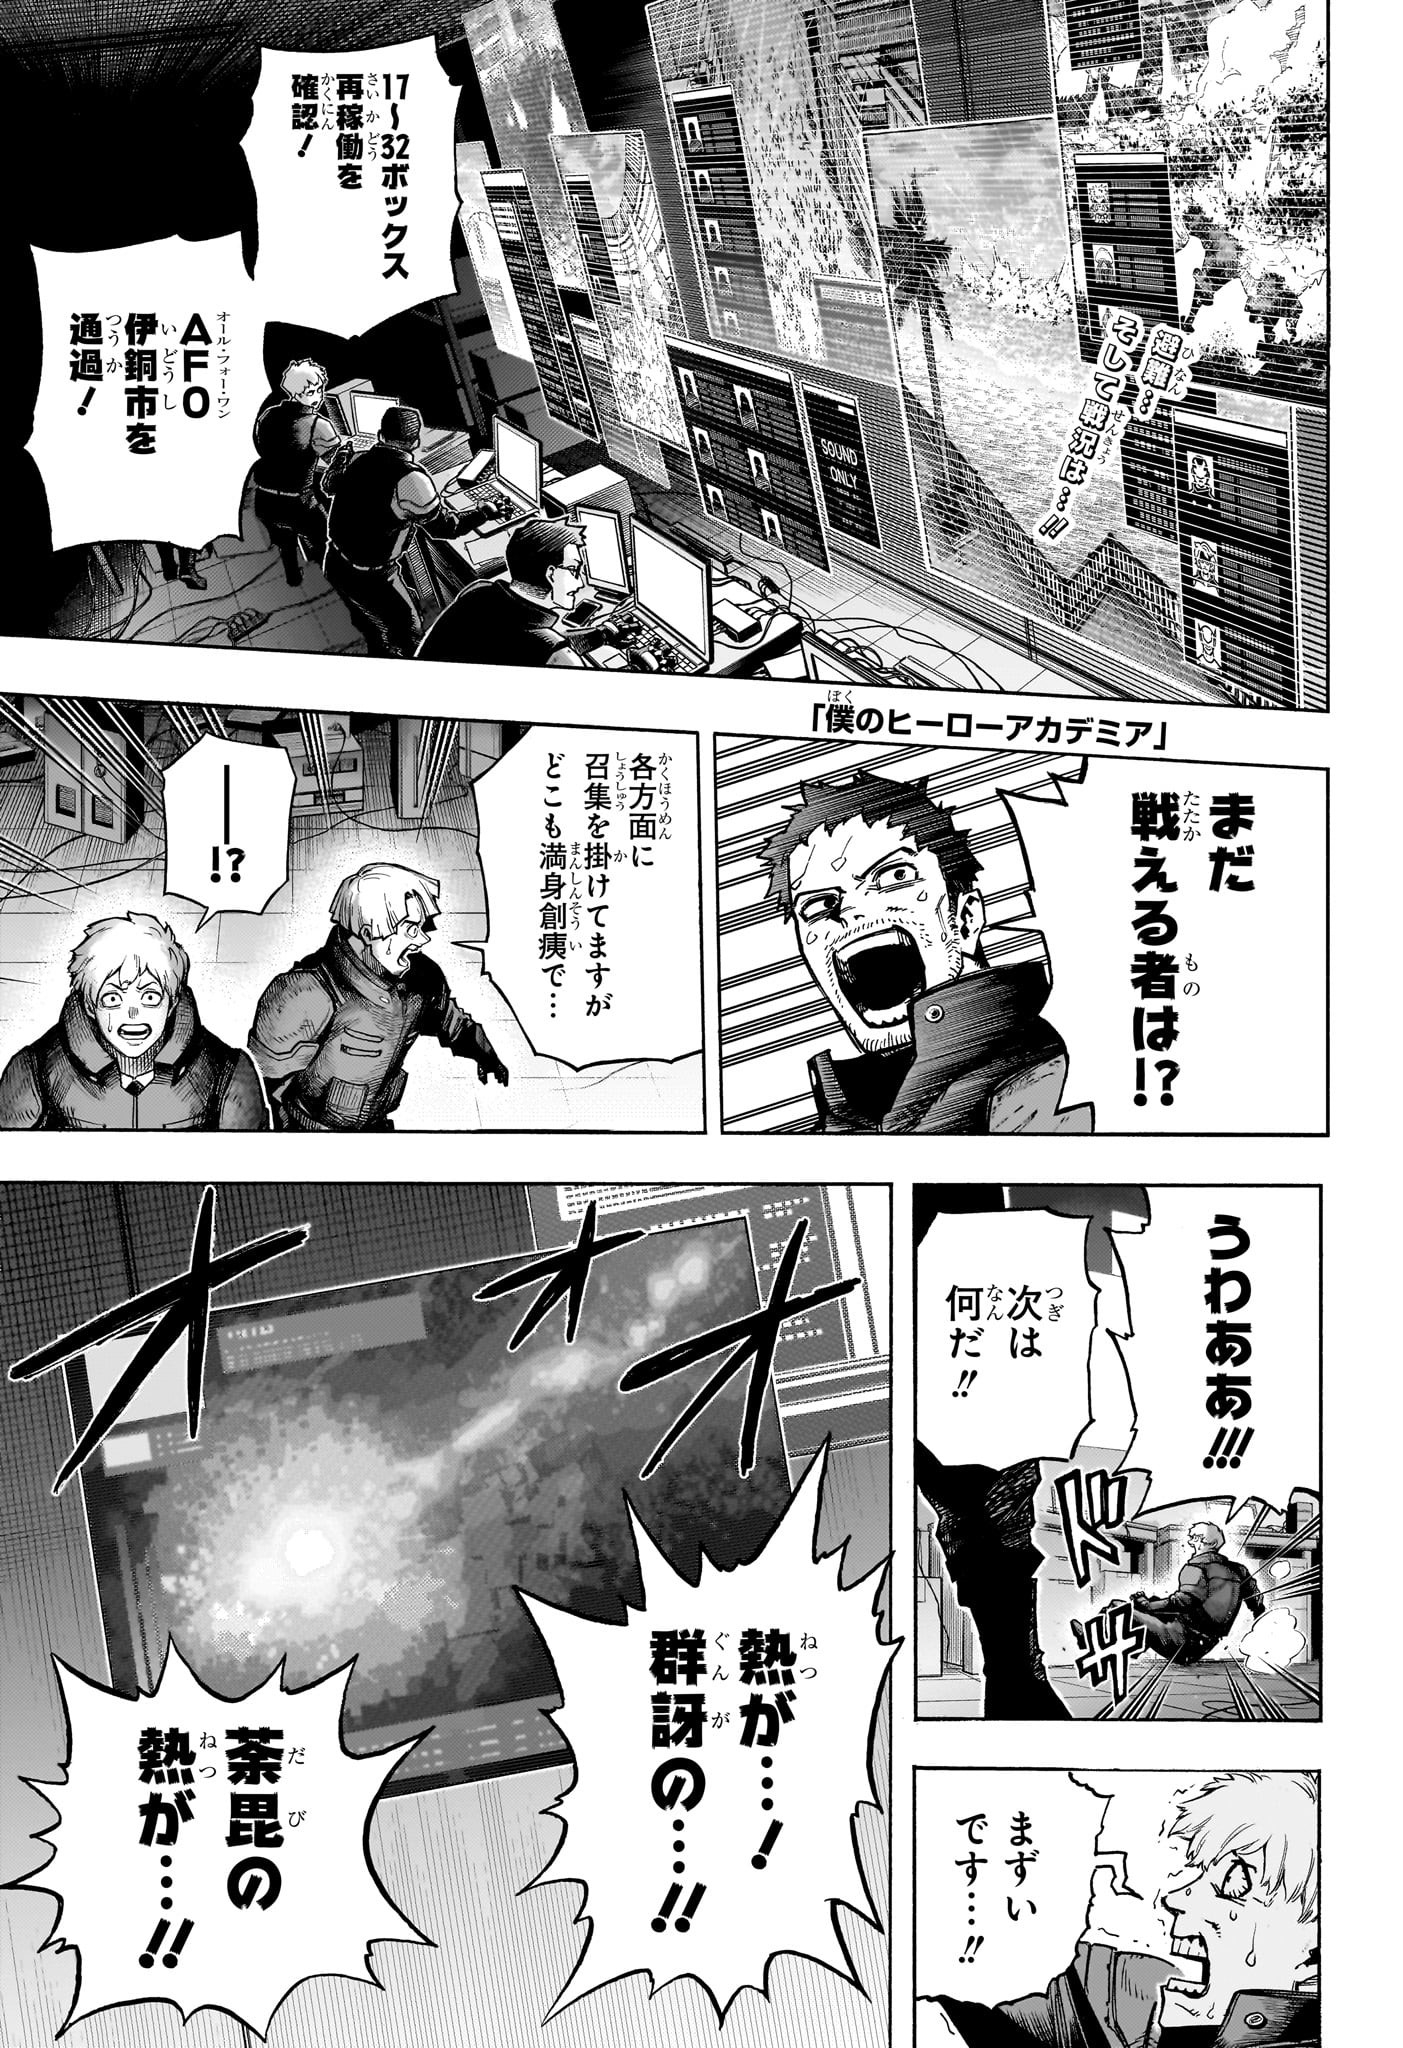 Boku no Hero Academia - Chapter 386 - Page 1